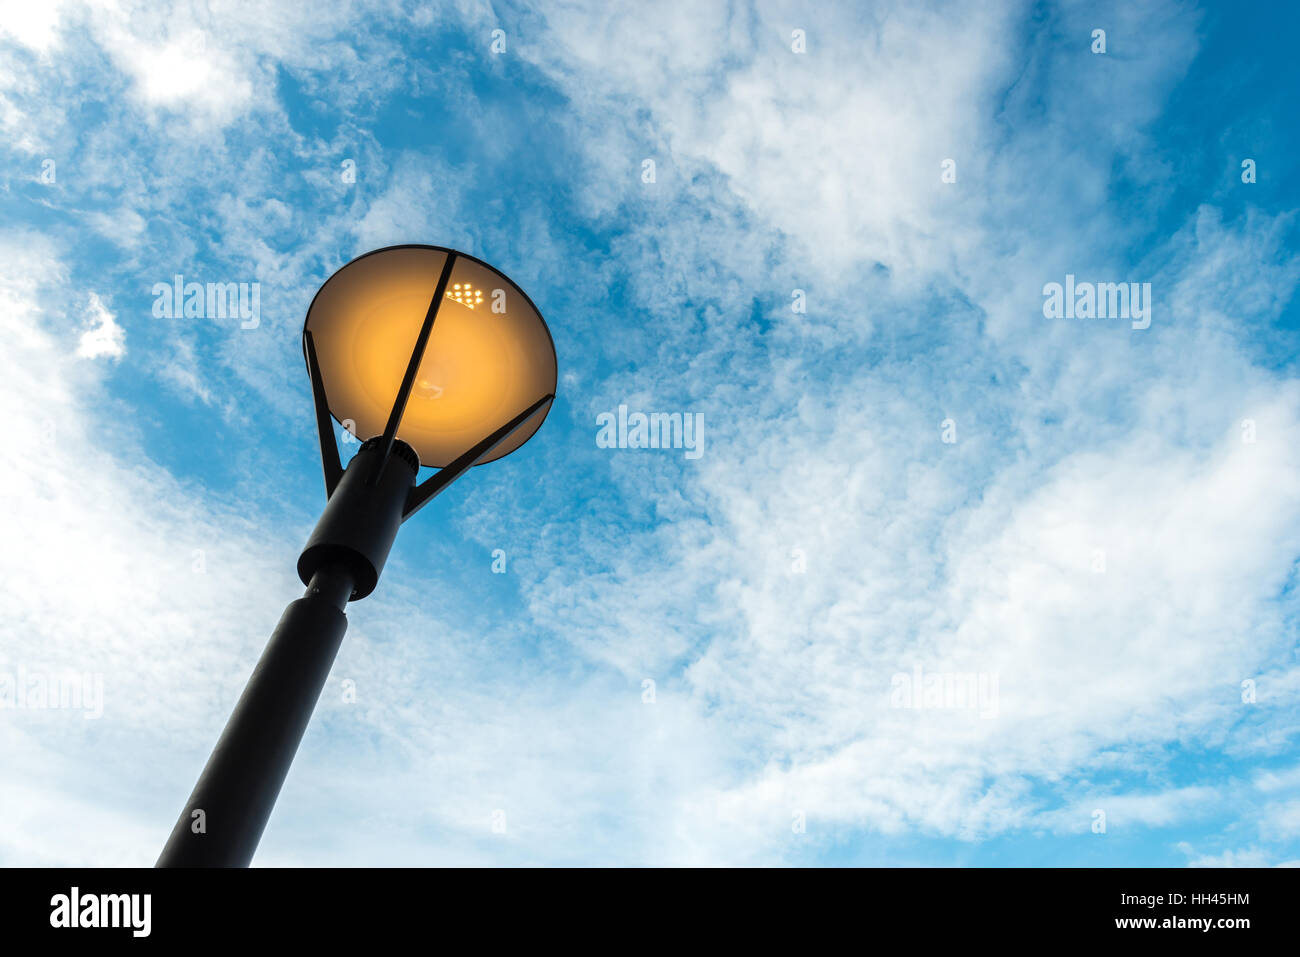 modern style lamp against blue sky Stock Photo